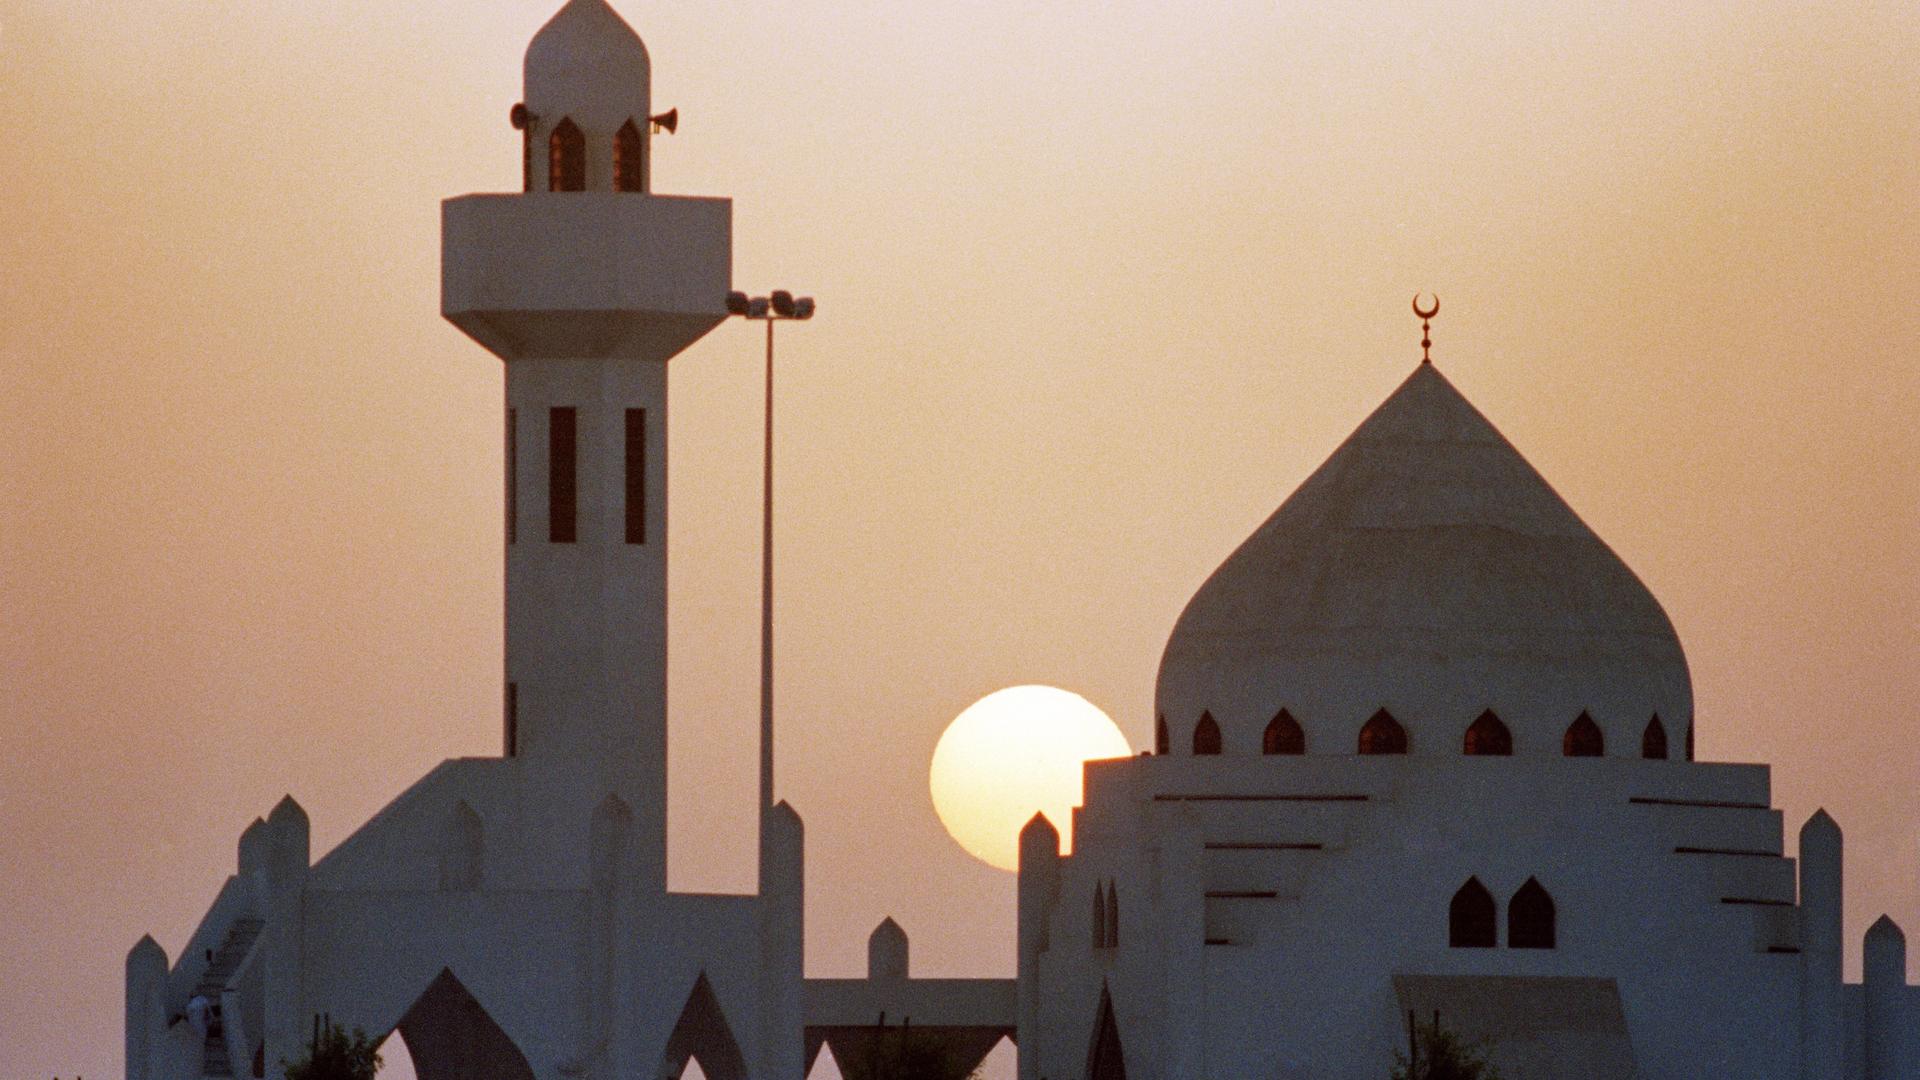 The sun rises over a Mosque on the Persian Gulf in Al-Khobar, Saudi Arabia, Sept. 9, 1990.